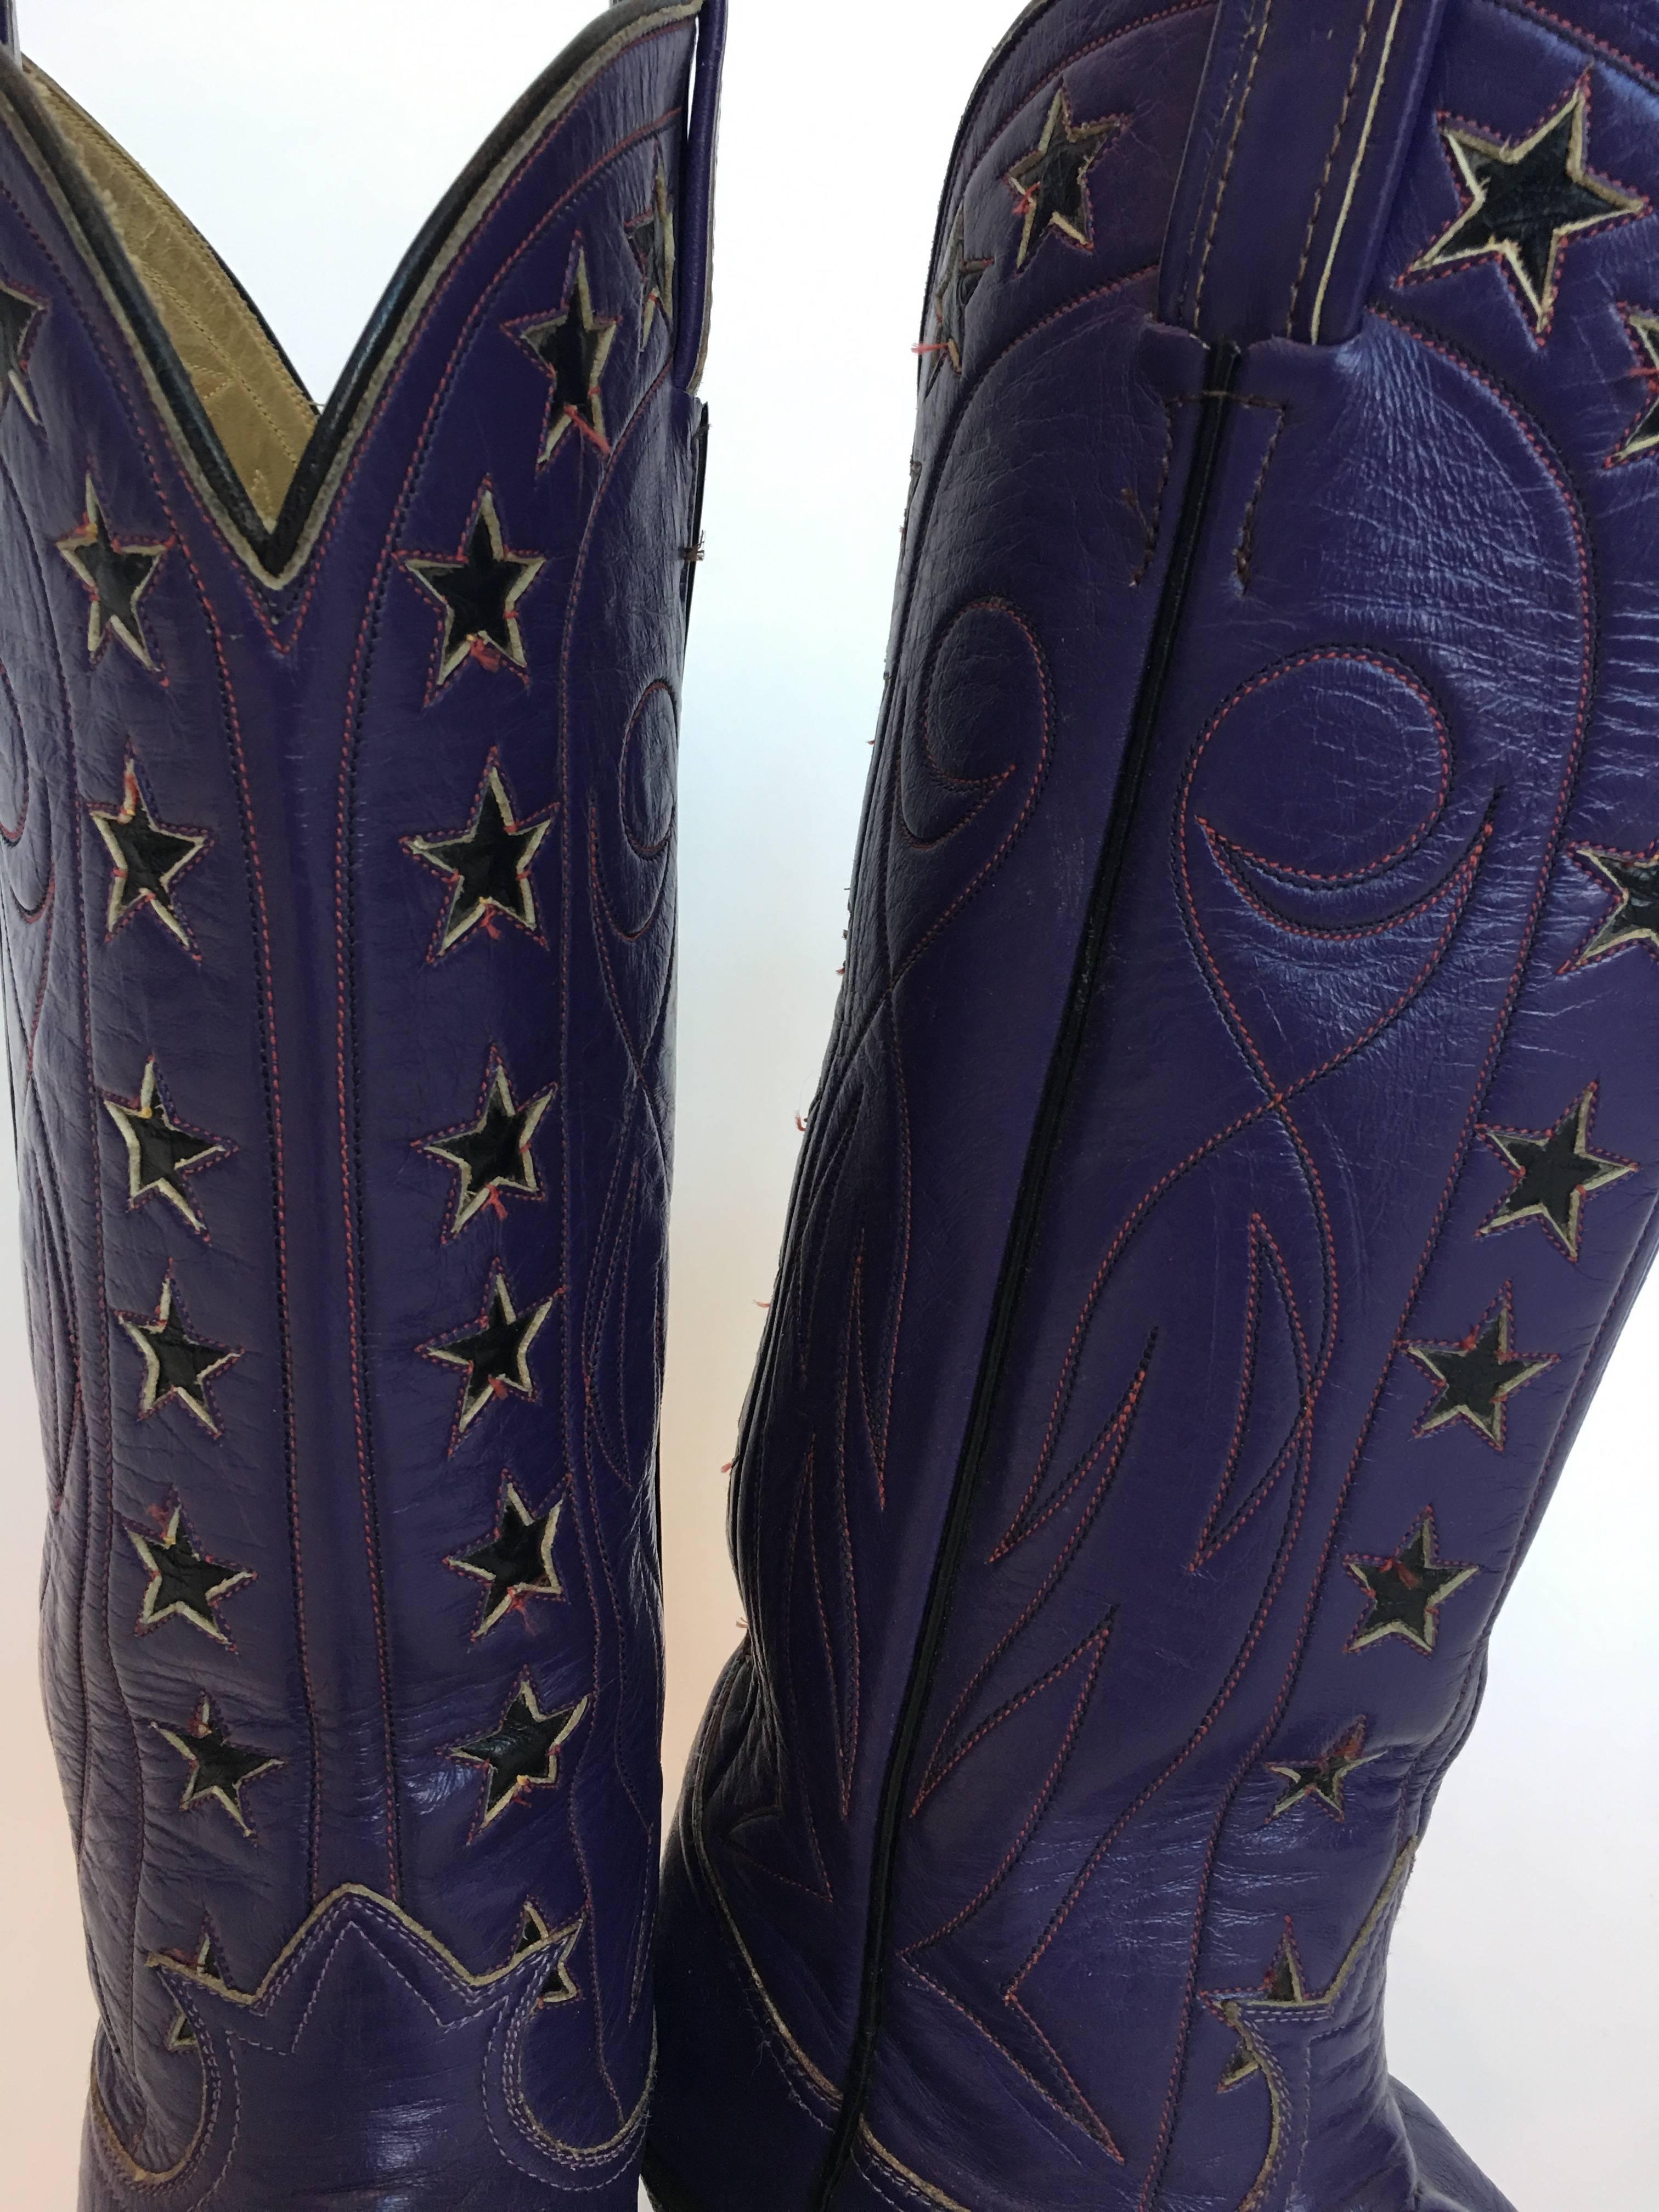 Tony Lama Vintage Purple Cowboy Boots w/ Stars

Size not marked

Measurements:
Toe to heel 11